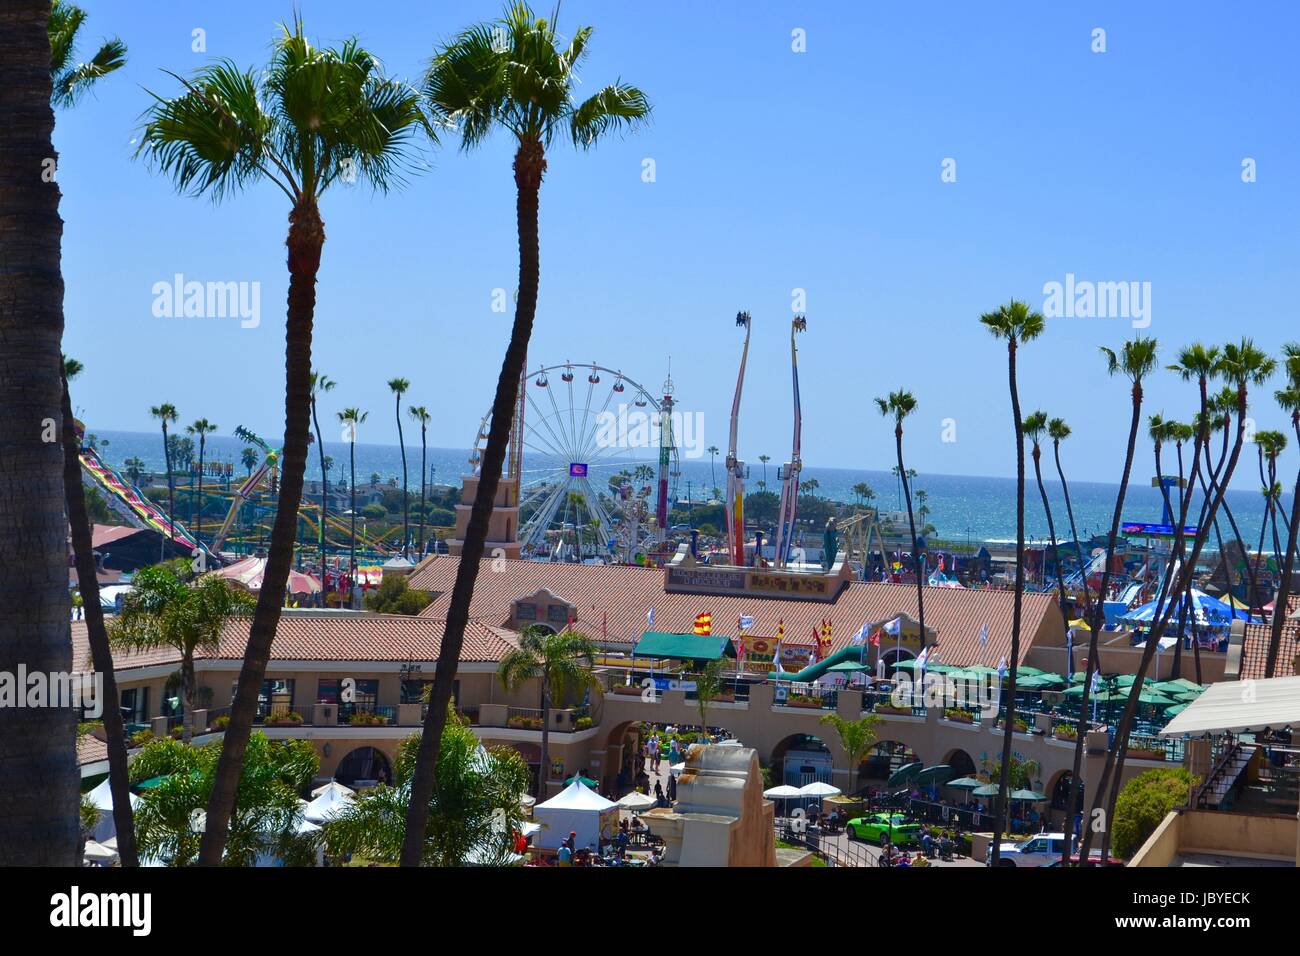 fairgrounds by the ocean, Del Mar, California Stock Photo